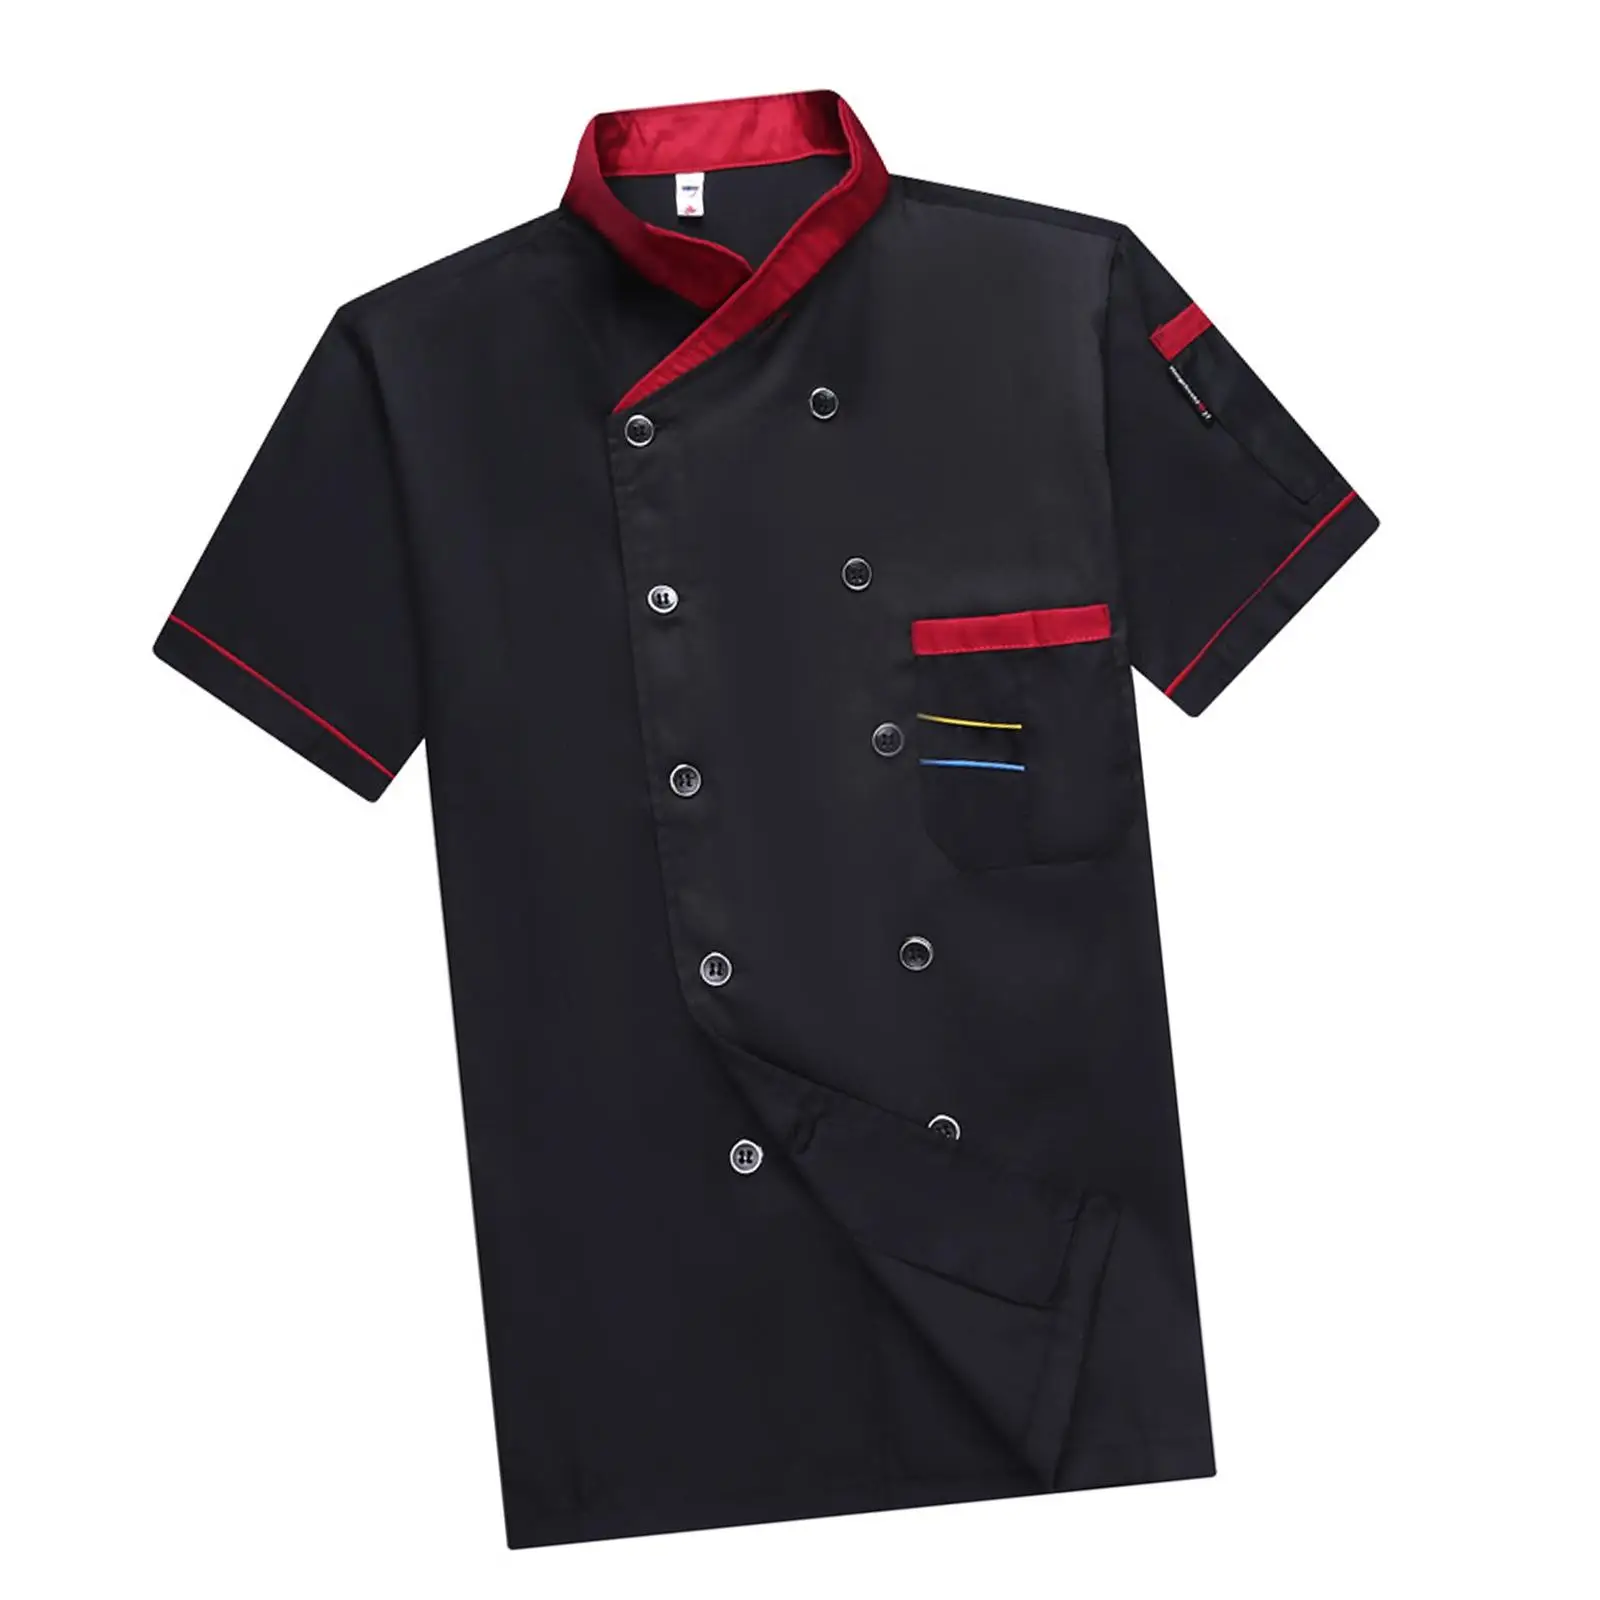 Unisex Chef Uniform Jacket Waiter Waitress Short Sleeve Men Women Shirt Breathable Coat Work Wear Clothes for Restaurant Kitchen